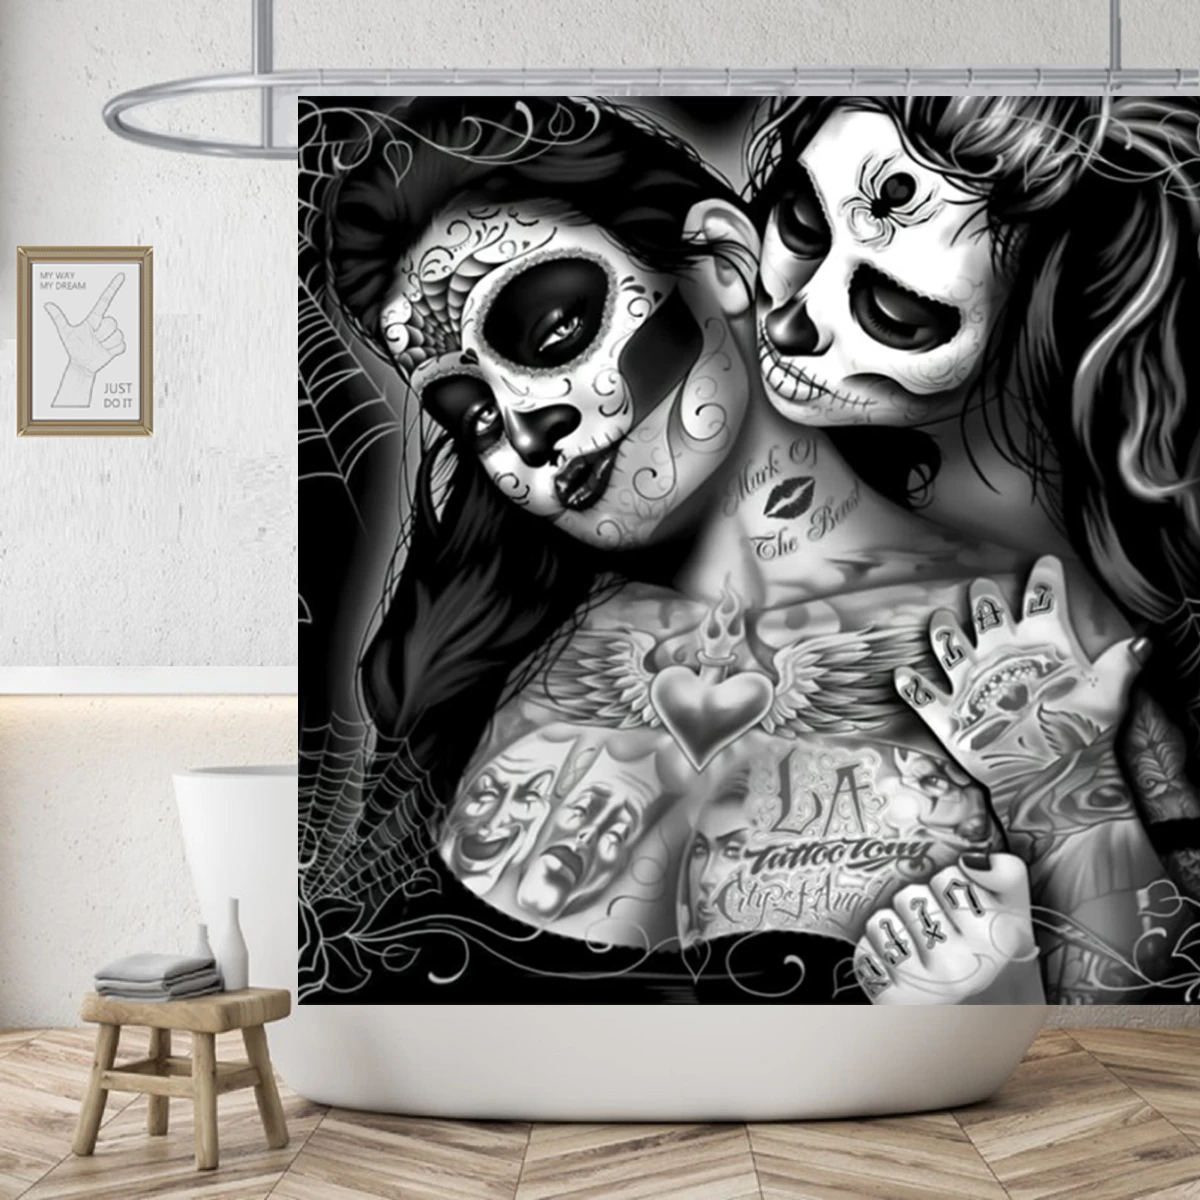 

Gothic Love Shower Curtain Skull Waterproof Polyester Fabric Cool Bathroom Home Decor cortina de la ducha